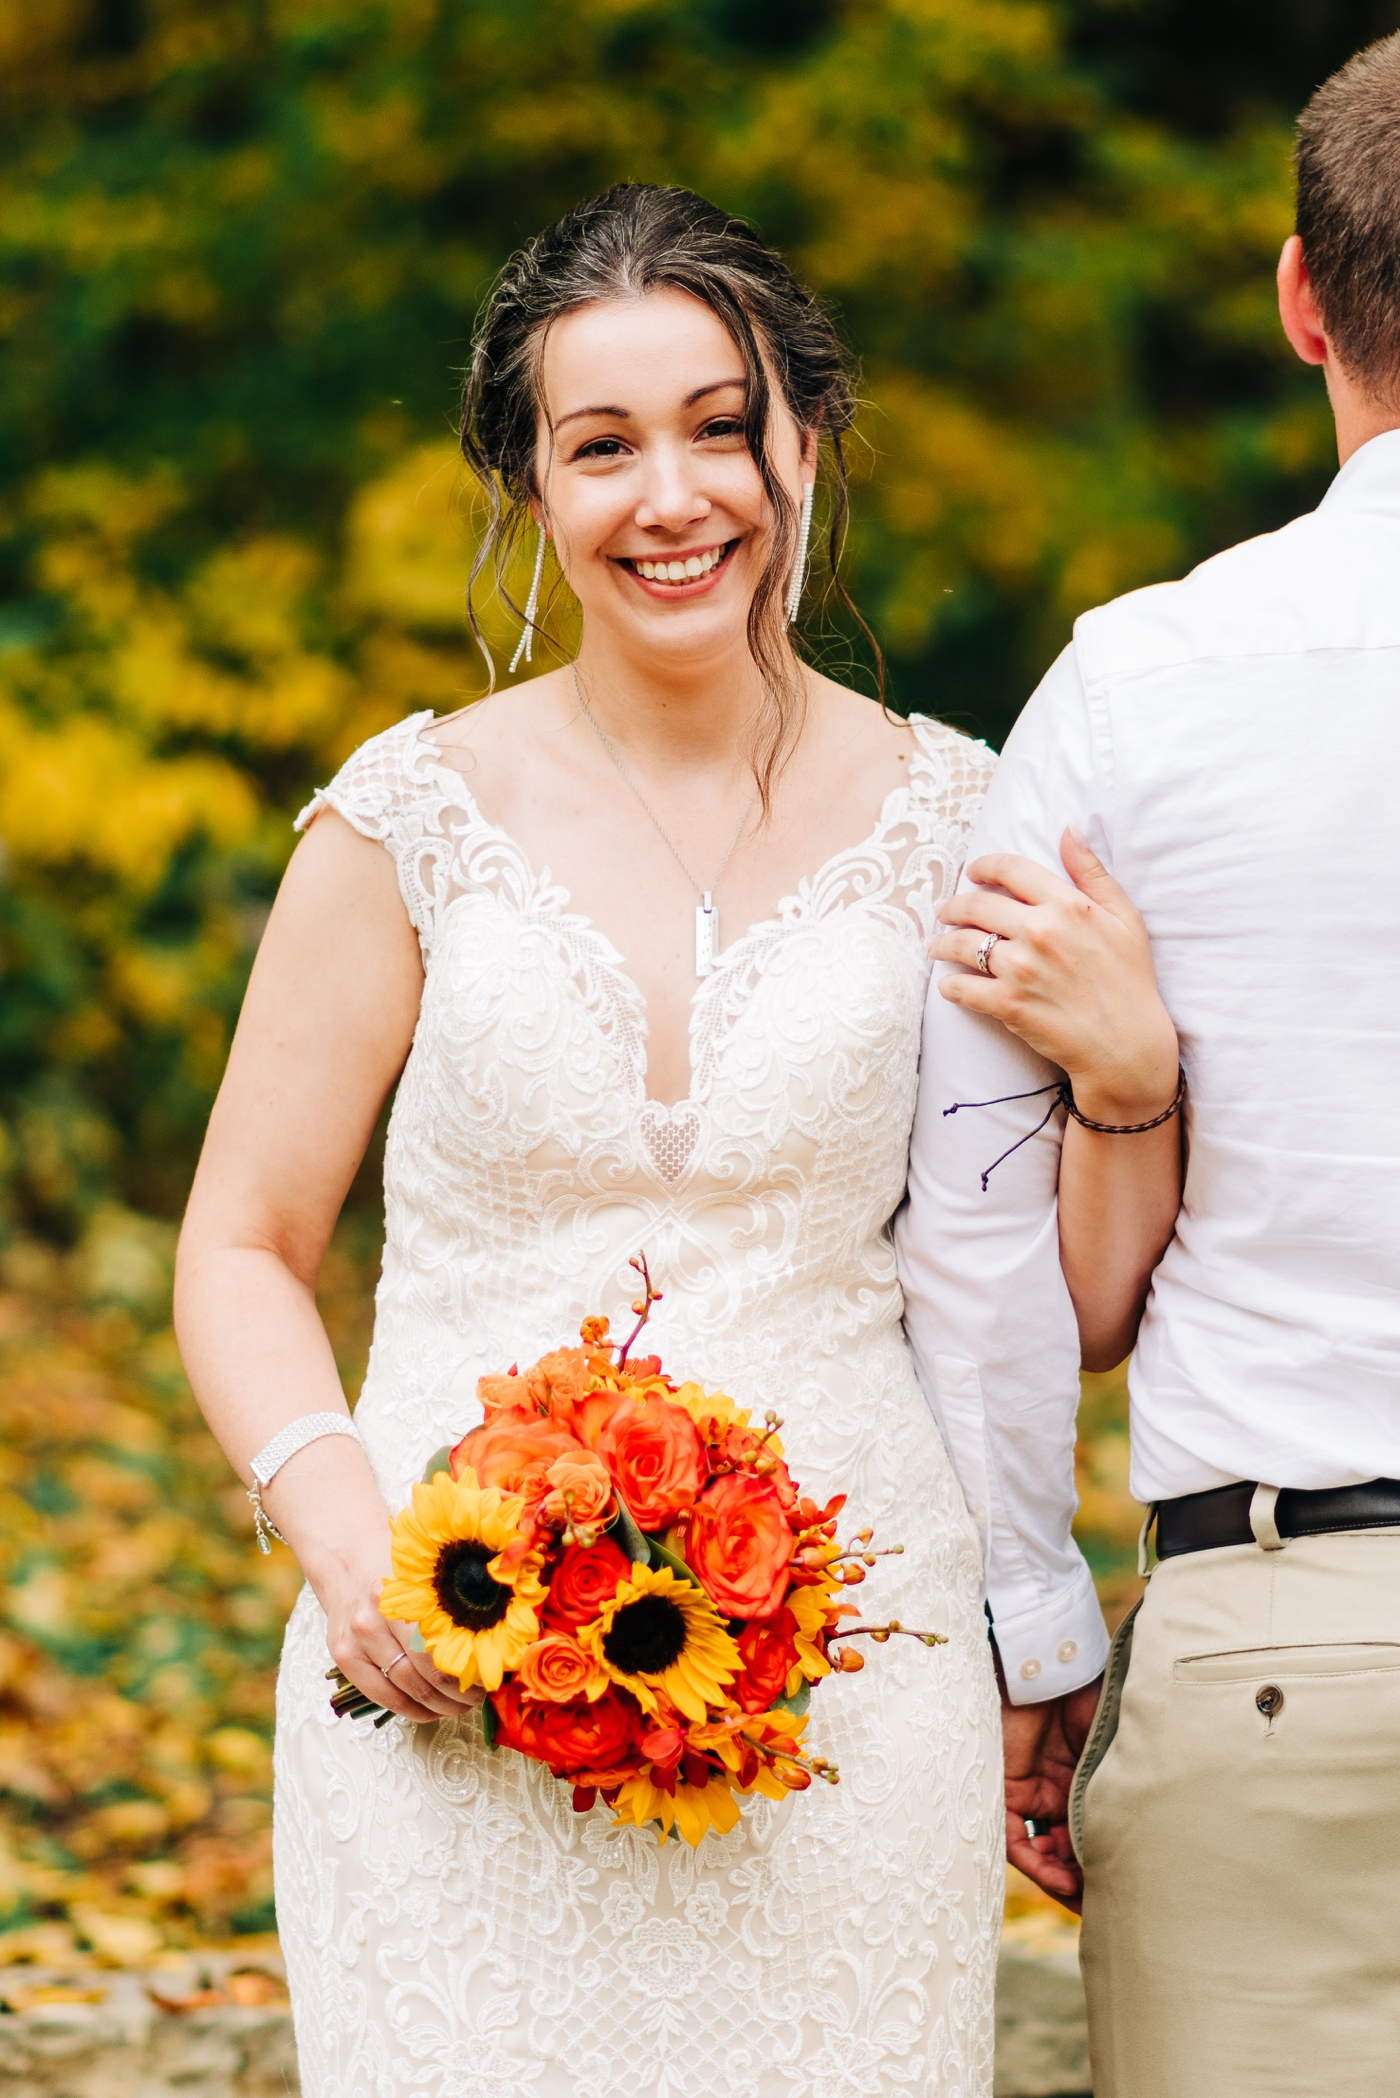 Bride with an orange flower and sunflower bouquet